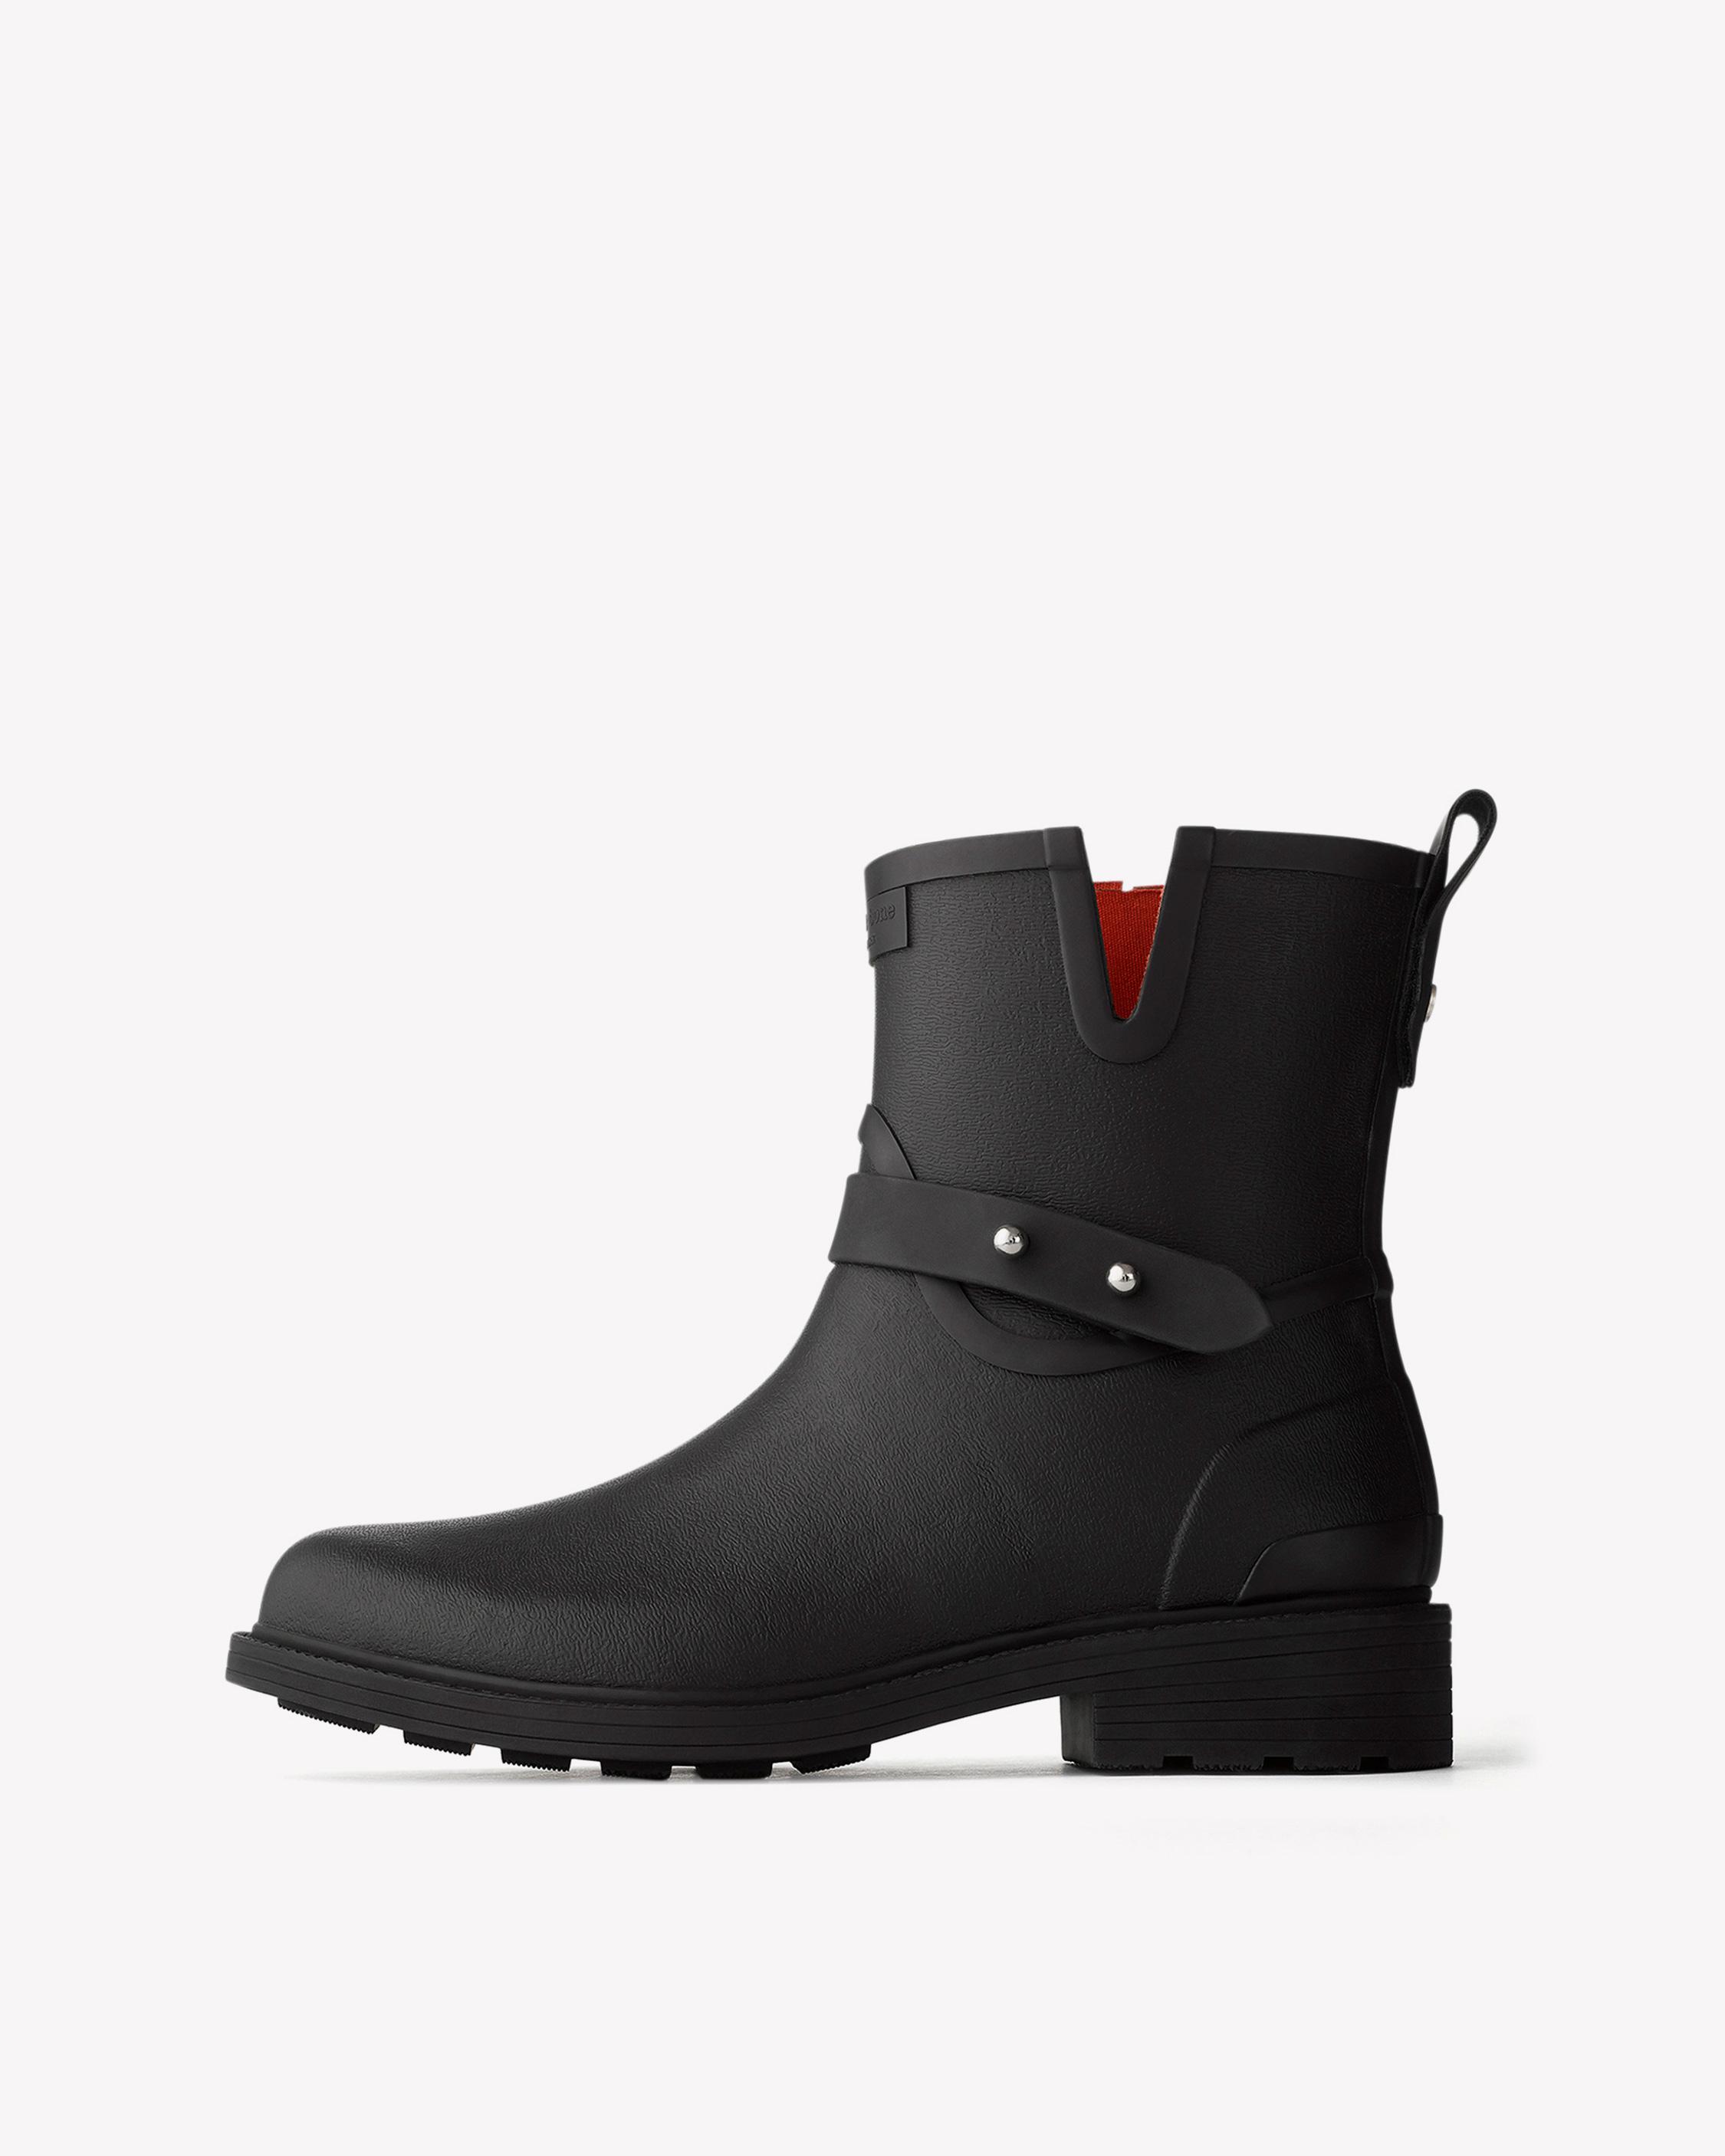 black blundstone boots